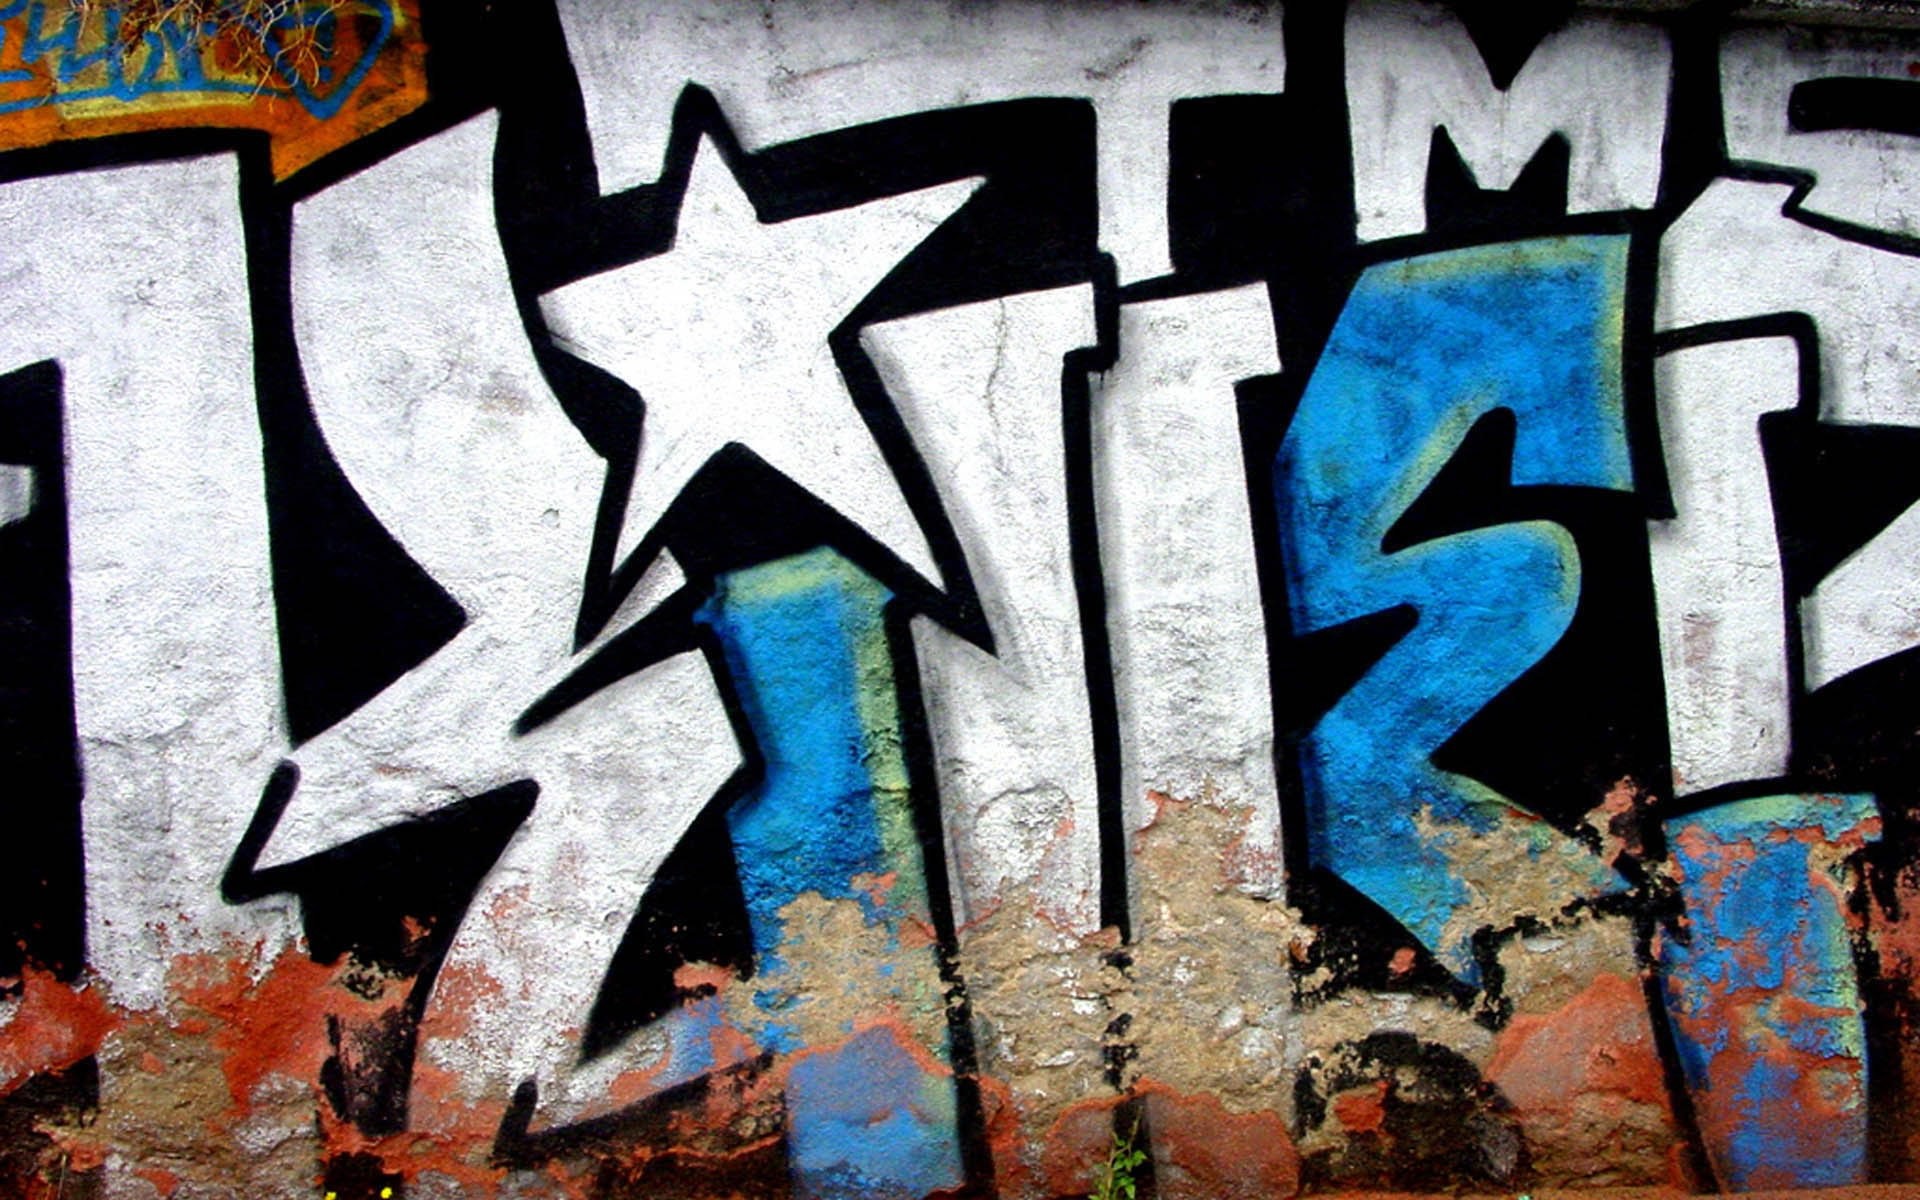 Hd Wallpaper - Graffiti Art - HD Wallpaper 